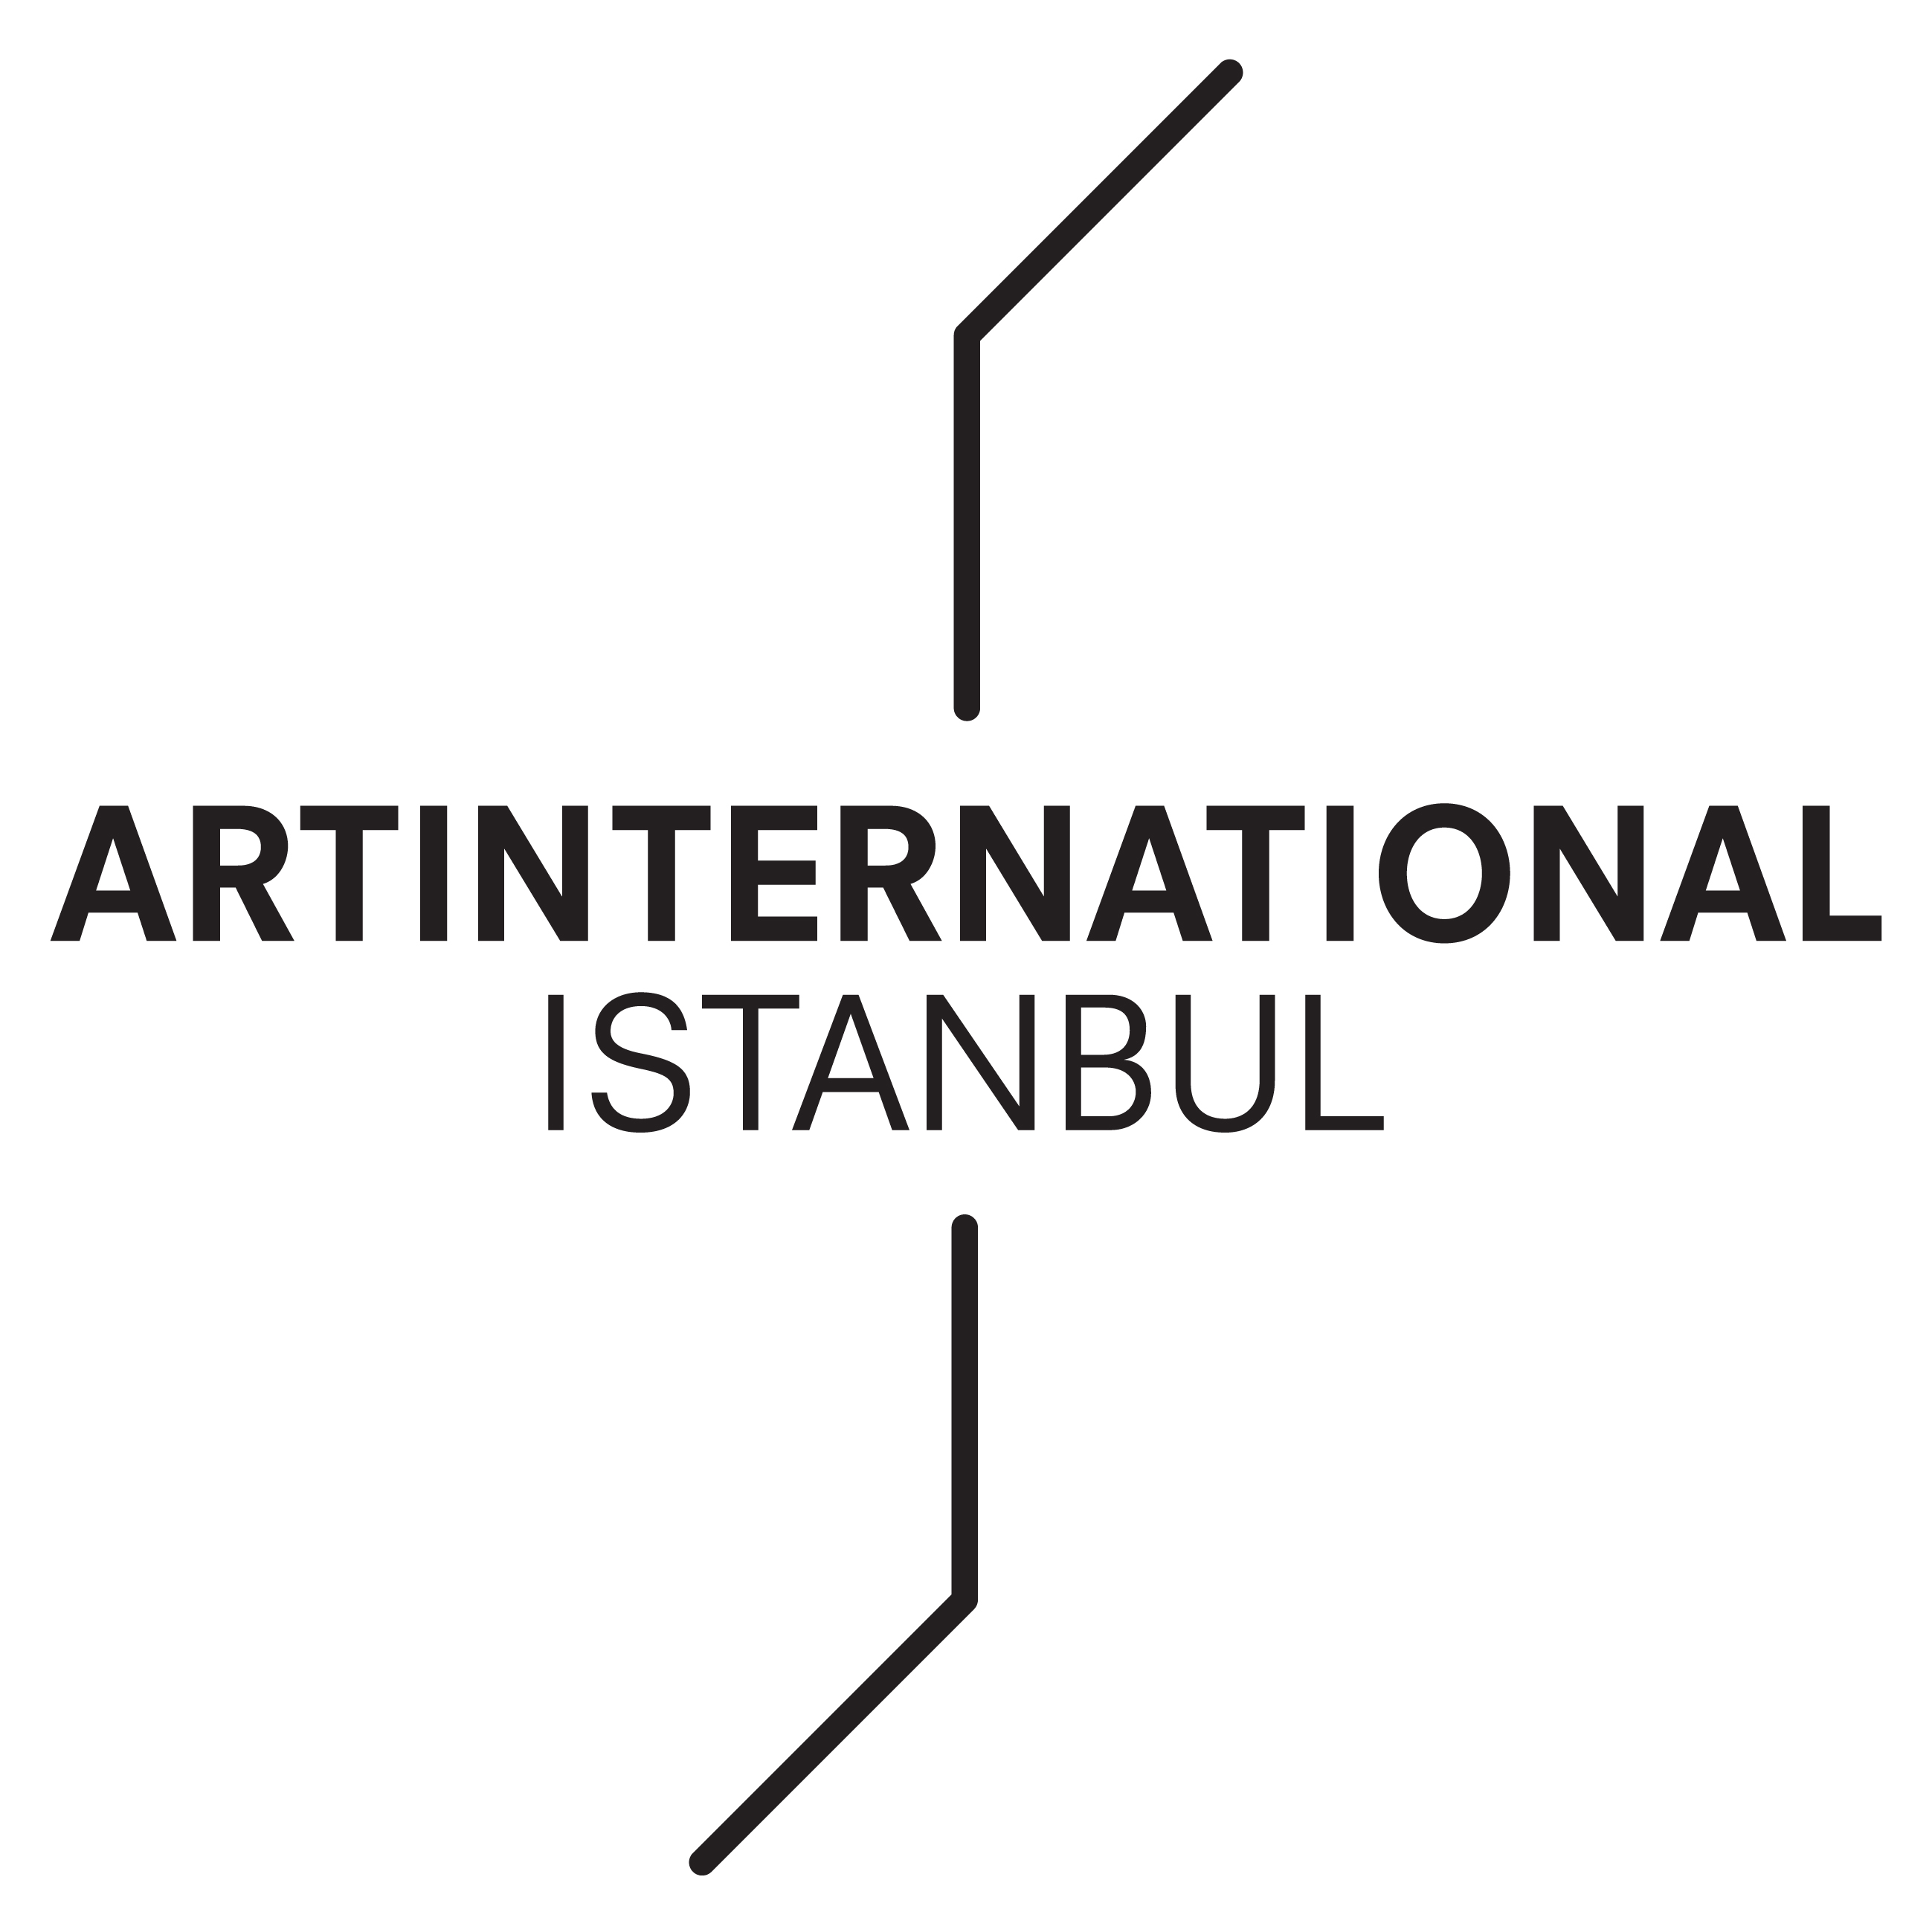 ArtInternational Istanbul